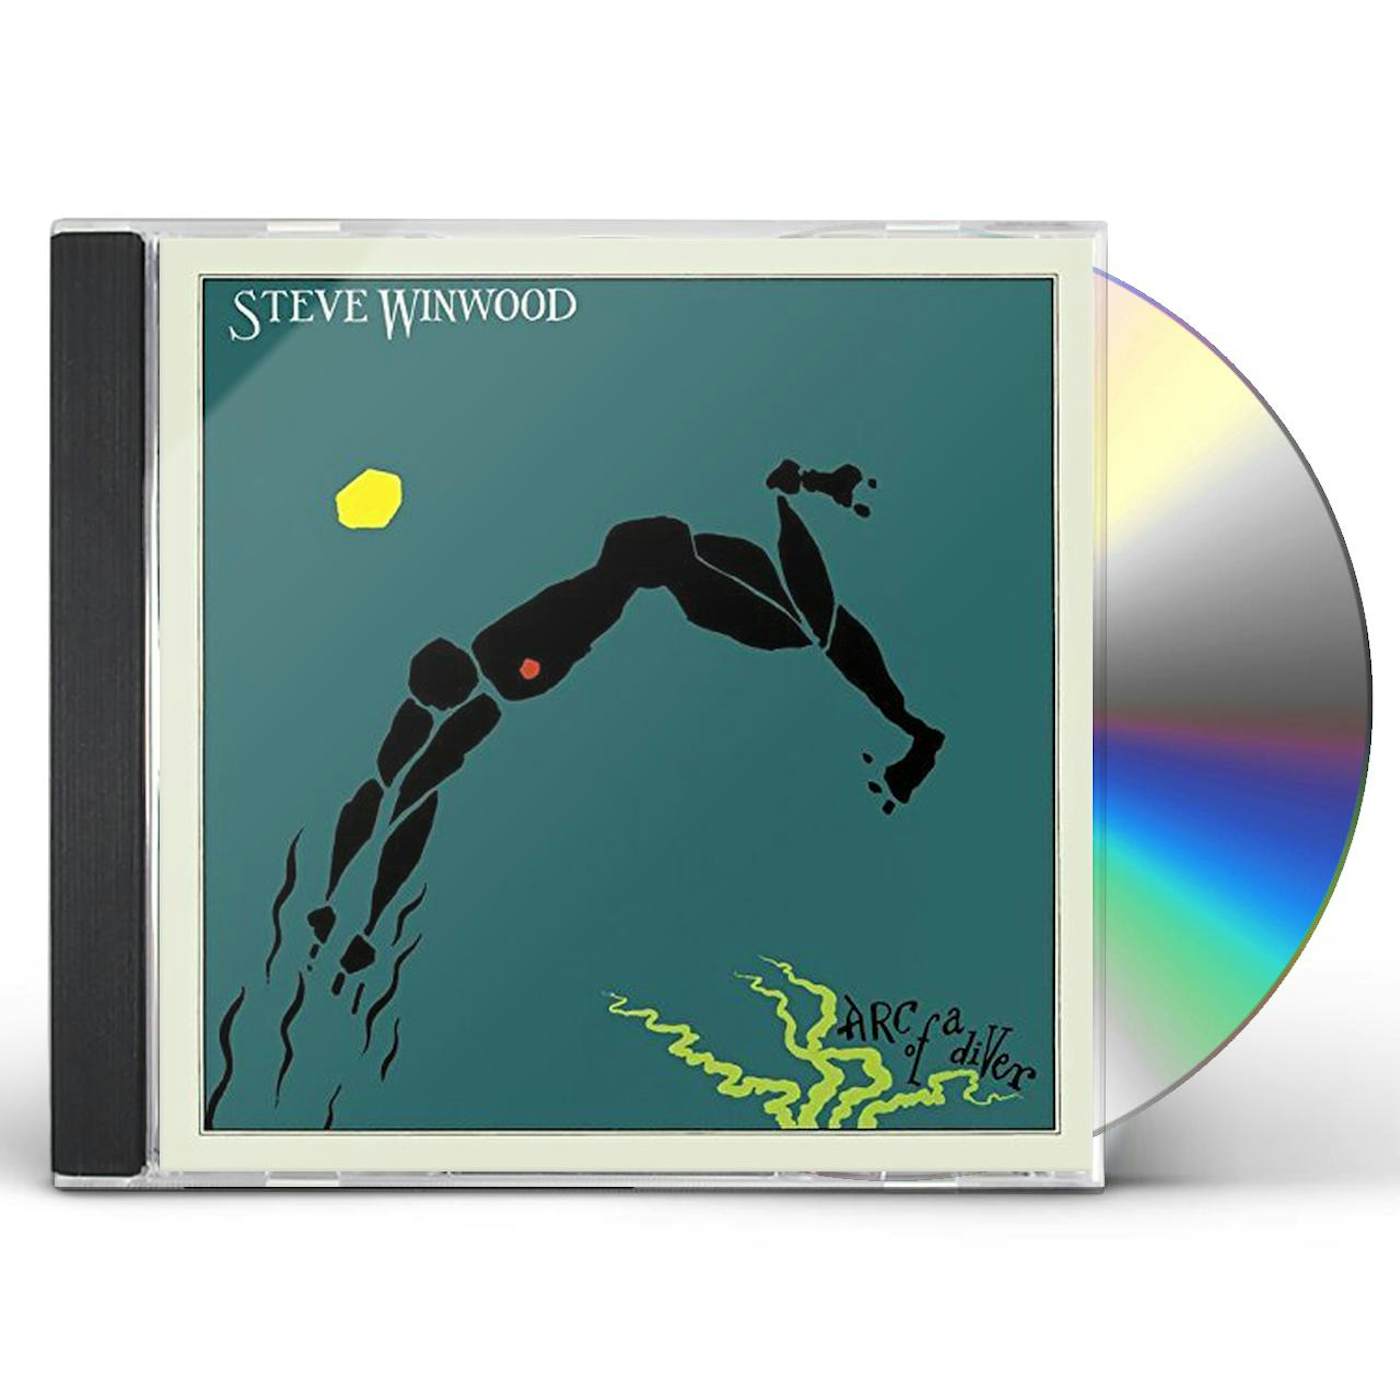 Steve Winwood ARC OF A DIVER CD